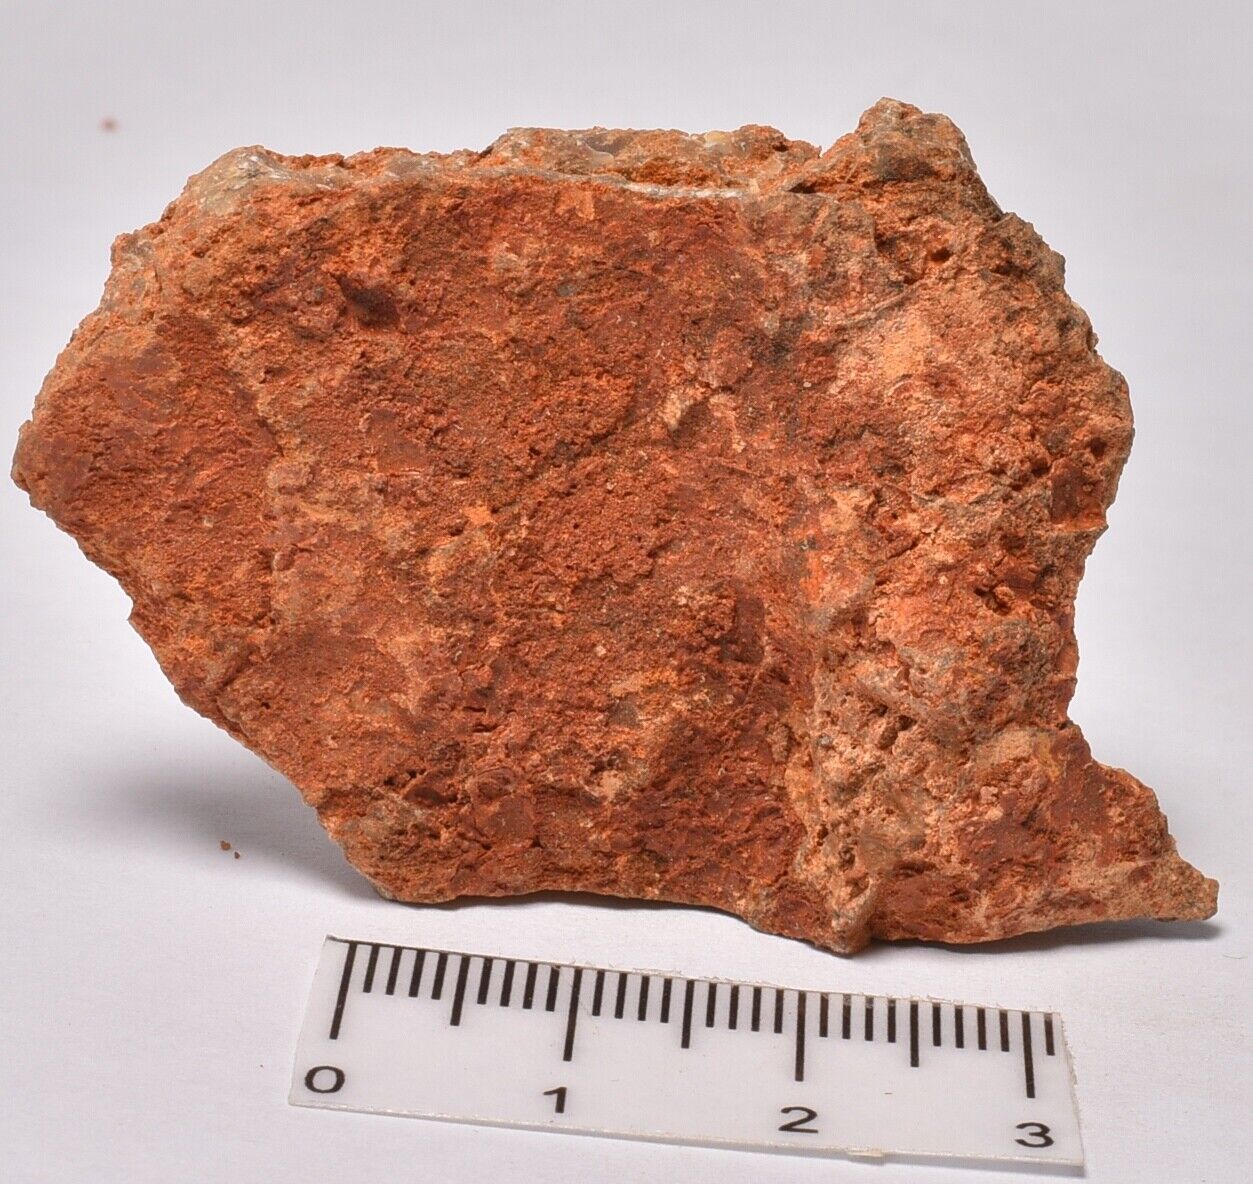 MICROBIAL MAT, Dresser Fmt, Stromatolite, North Pole Dome 18.6 SM109